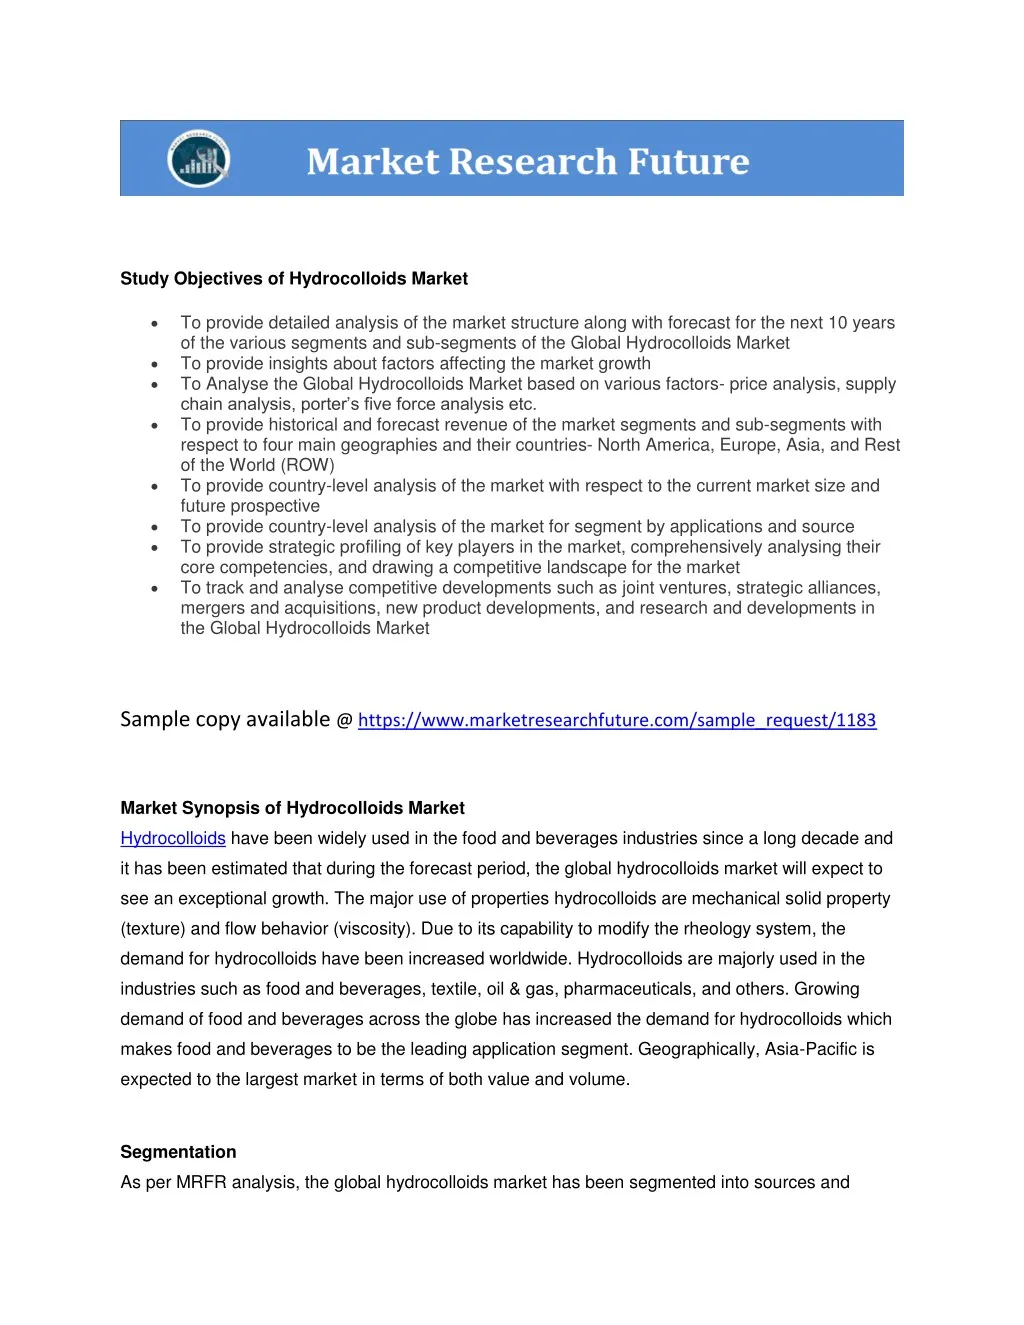 study objectives of hydrocolloids market